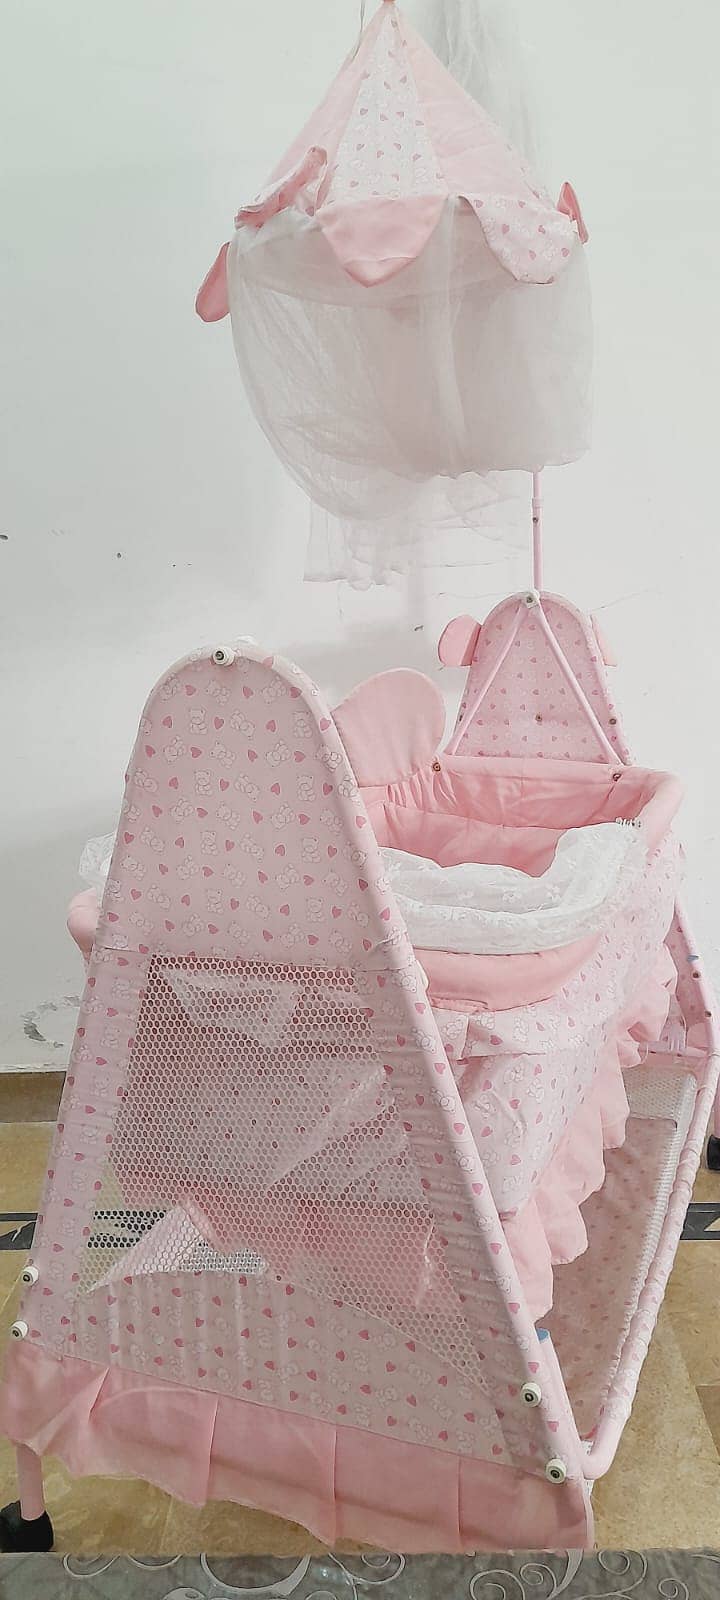 Baby cot / Baby beds / Kid baby cot / Kids furniture 3